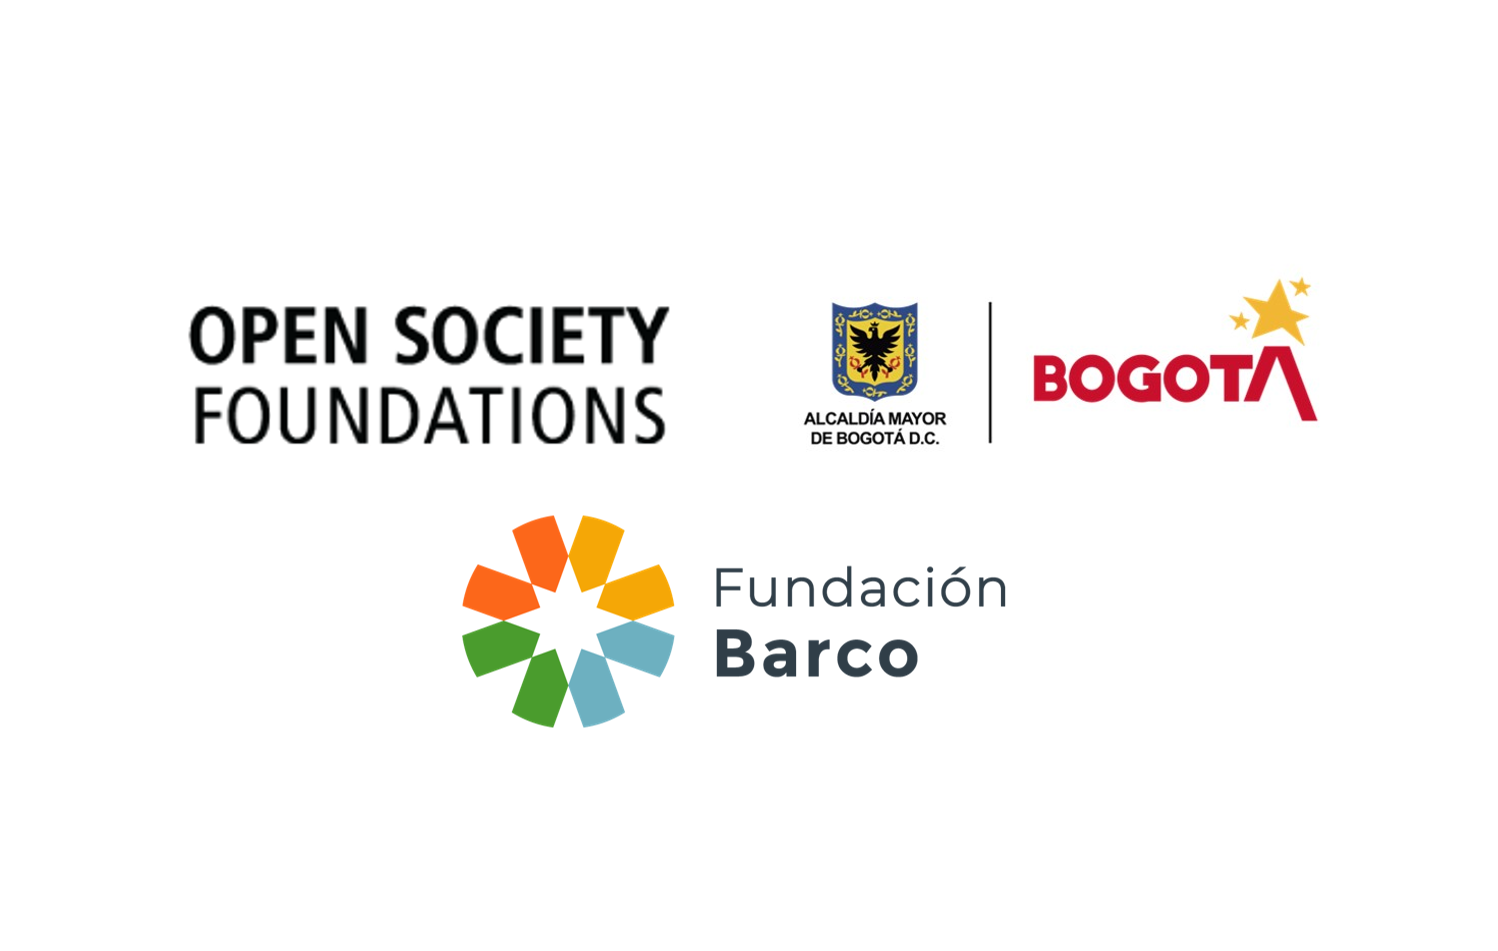 Open Society Foundations dona un millón de dólares a Bogotá para atender poblaciones vulnerables